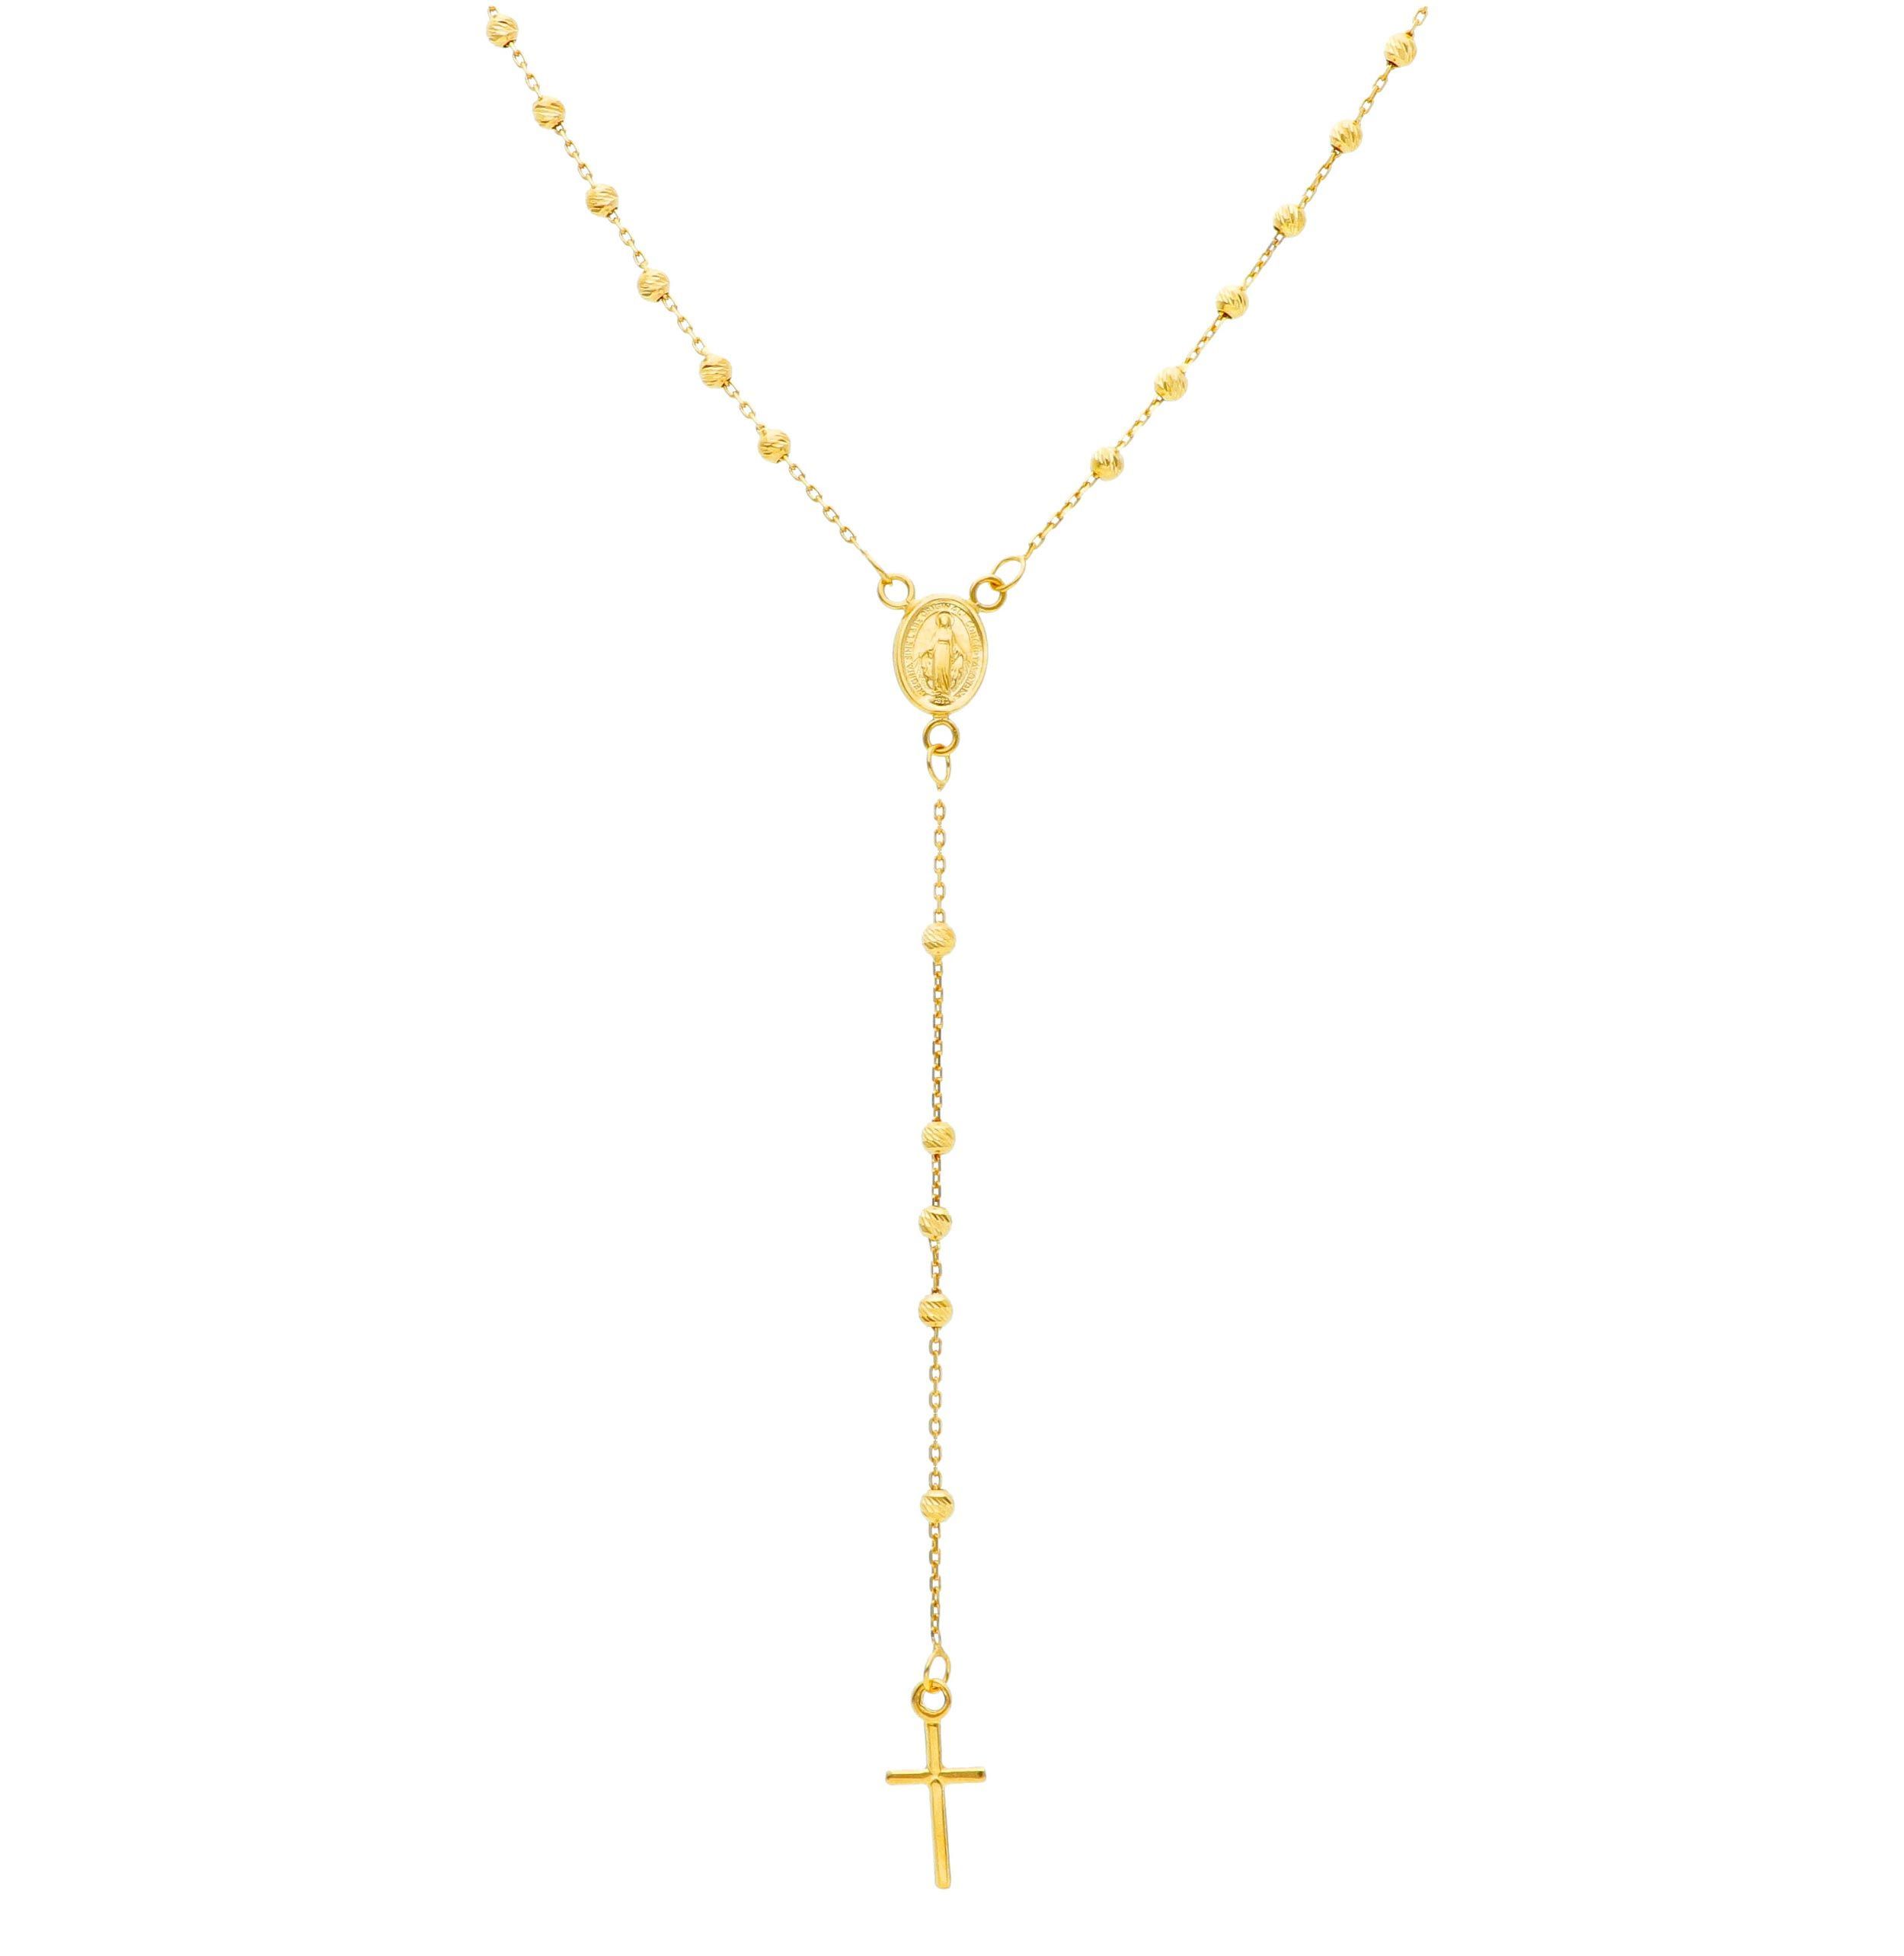 Collana rosario in oro giallo k14  (code S254730)